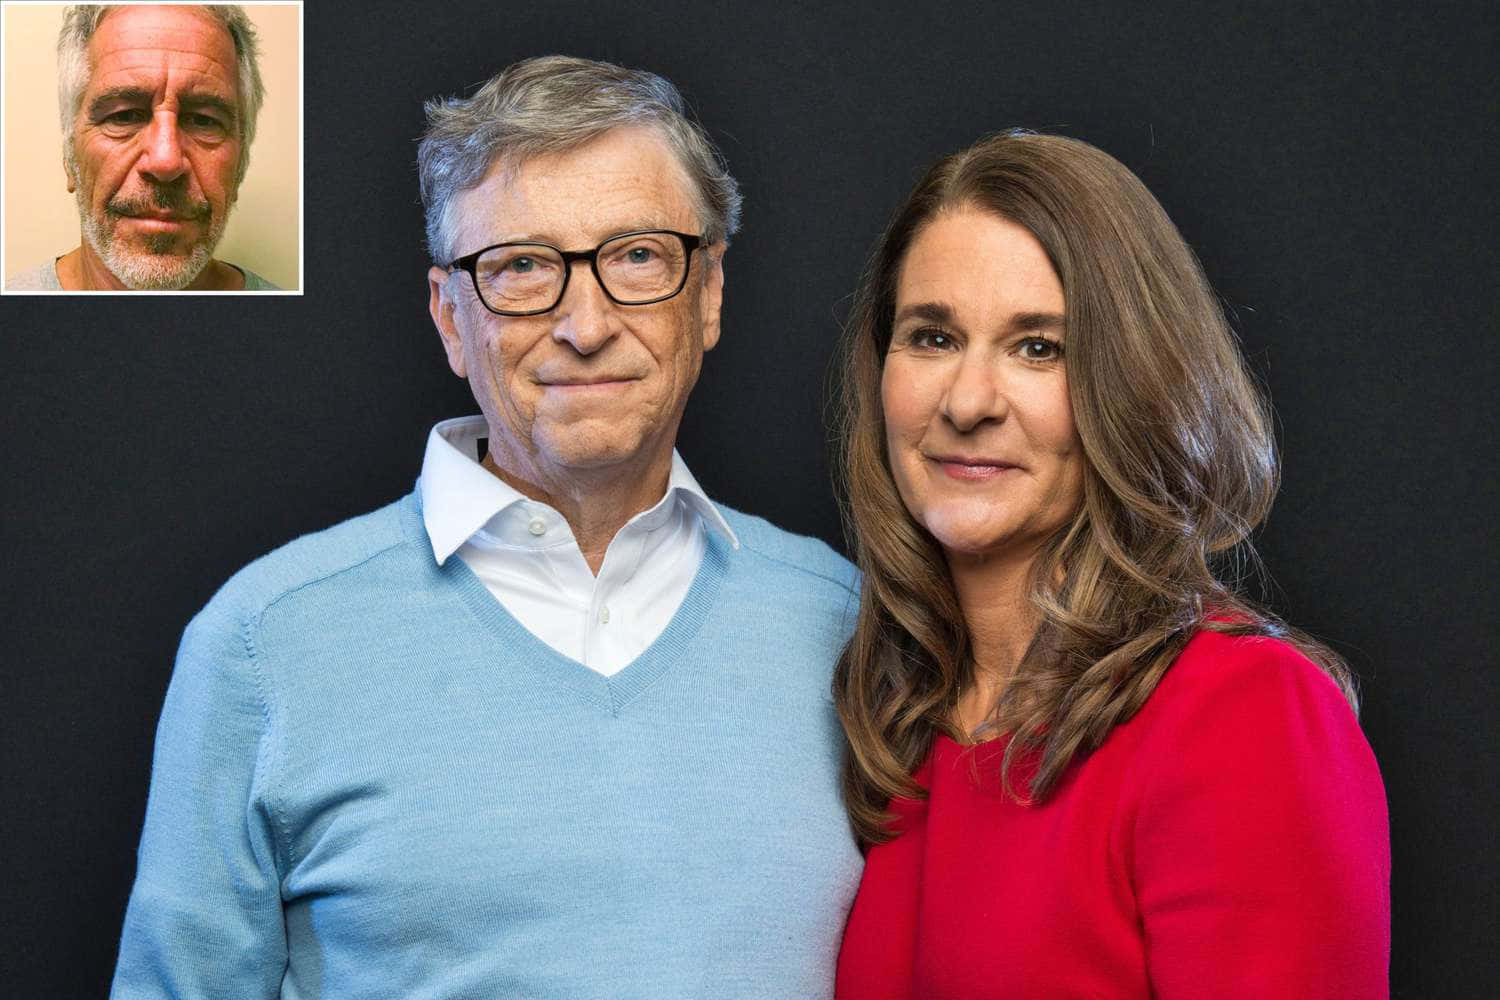 Bill Gates og Jeffrey Epstein deler et akavet øjeblik over en kop te.